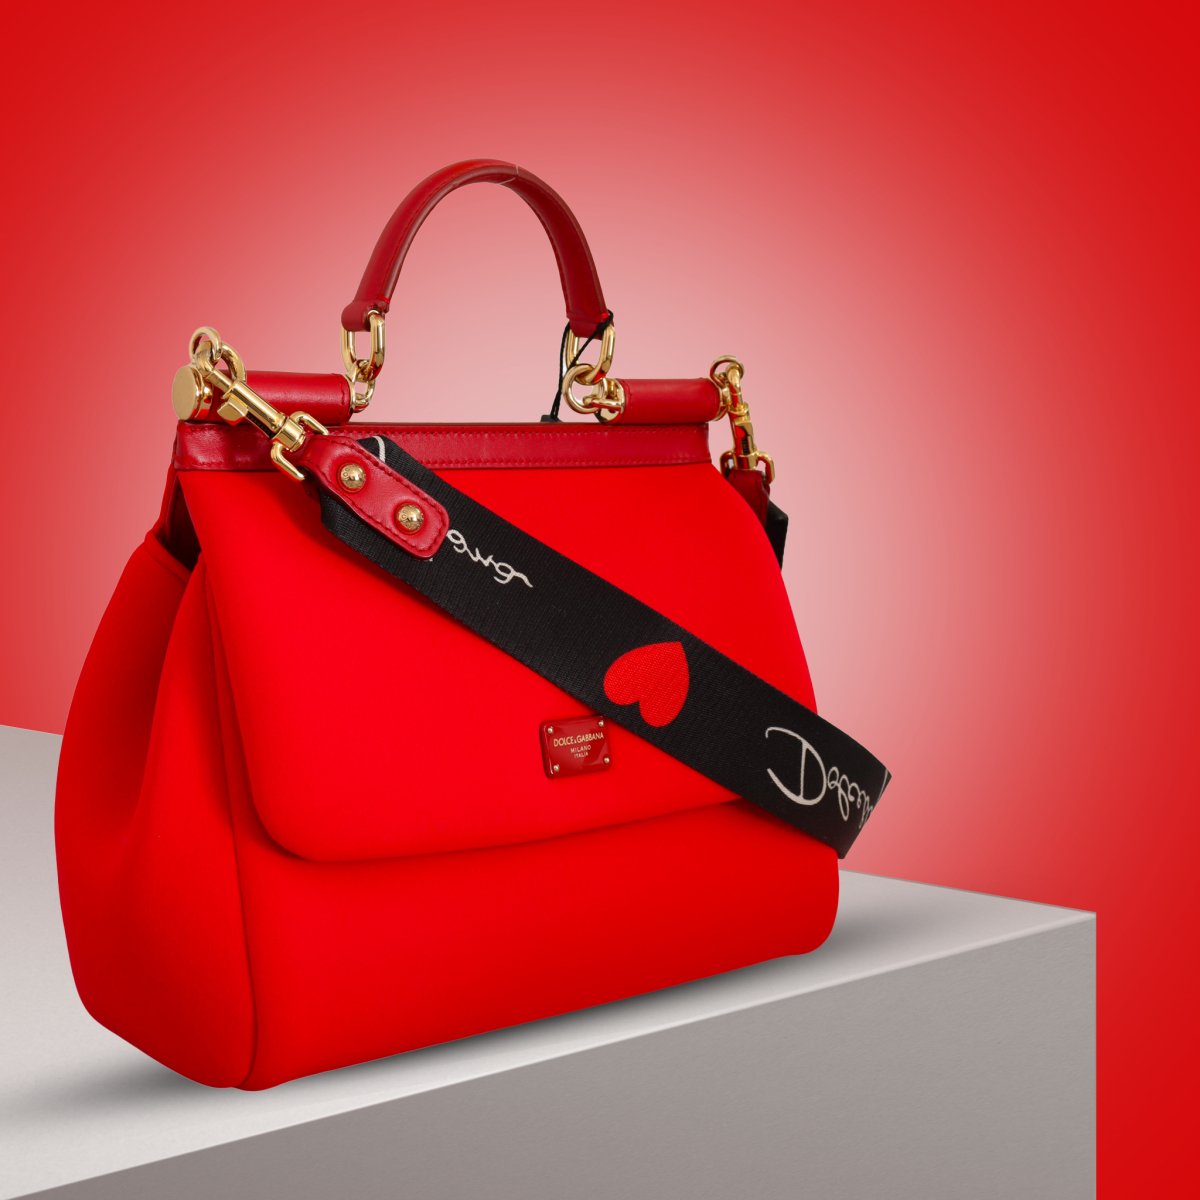 red dolce gabbana bag with heart logo strap